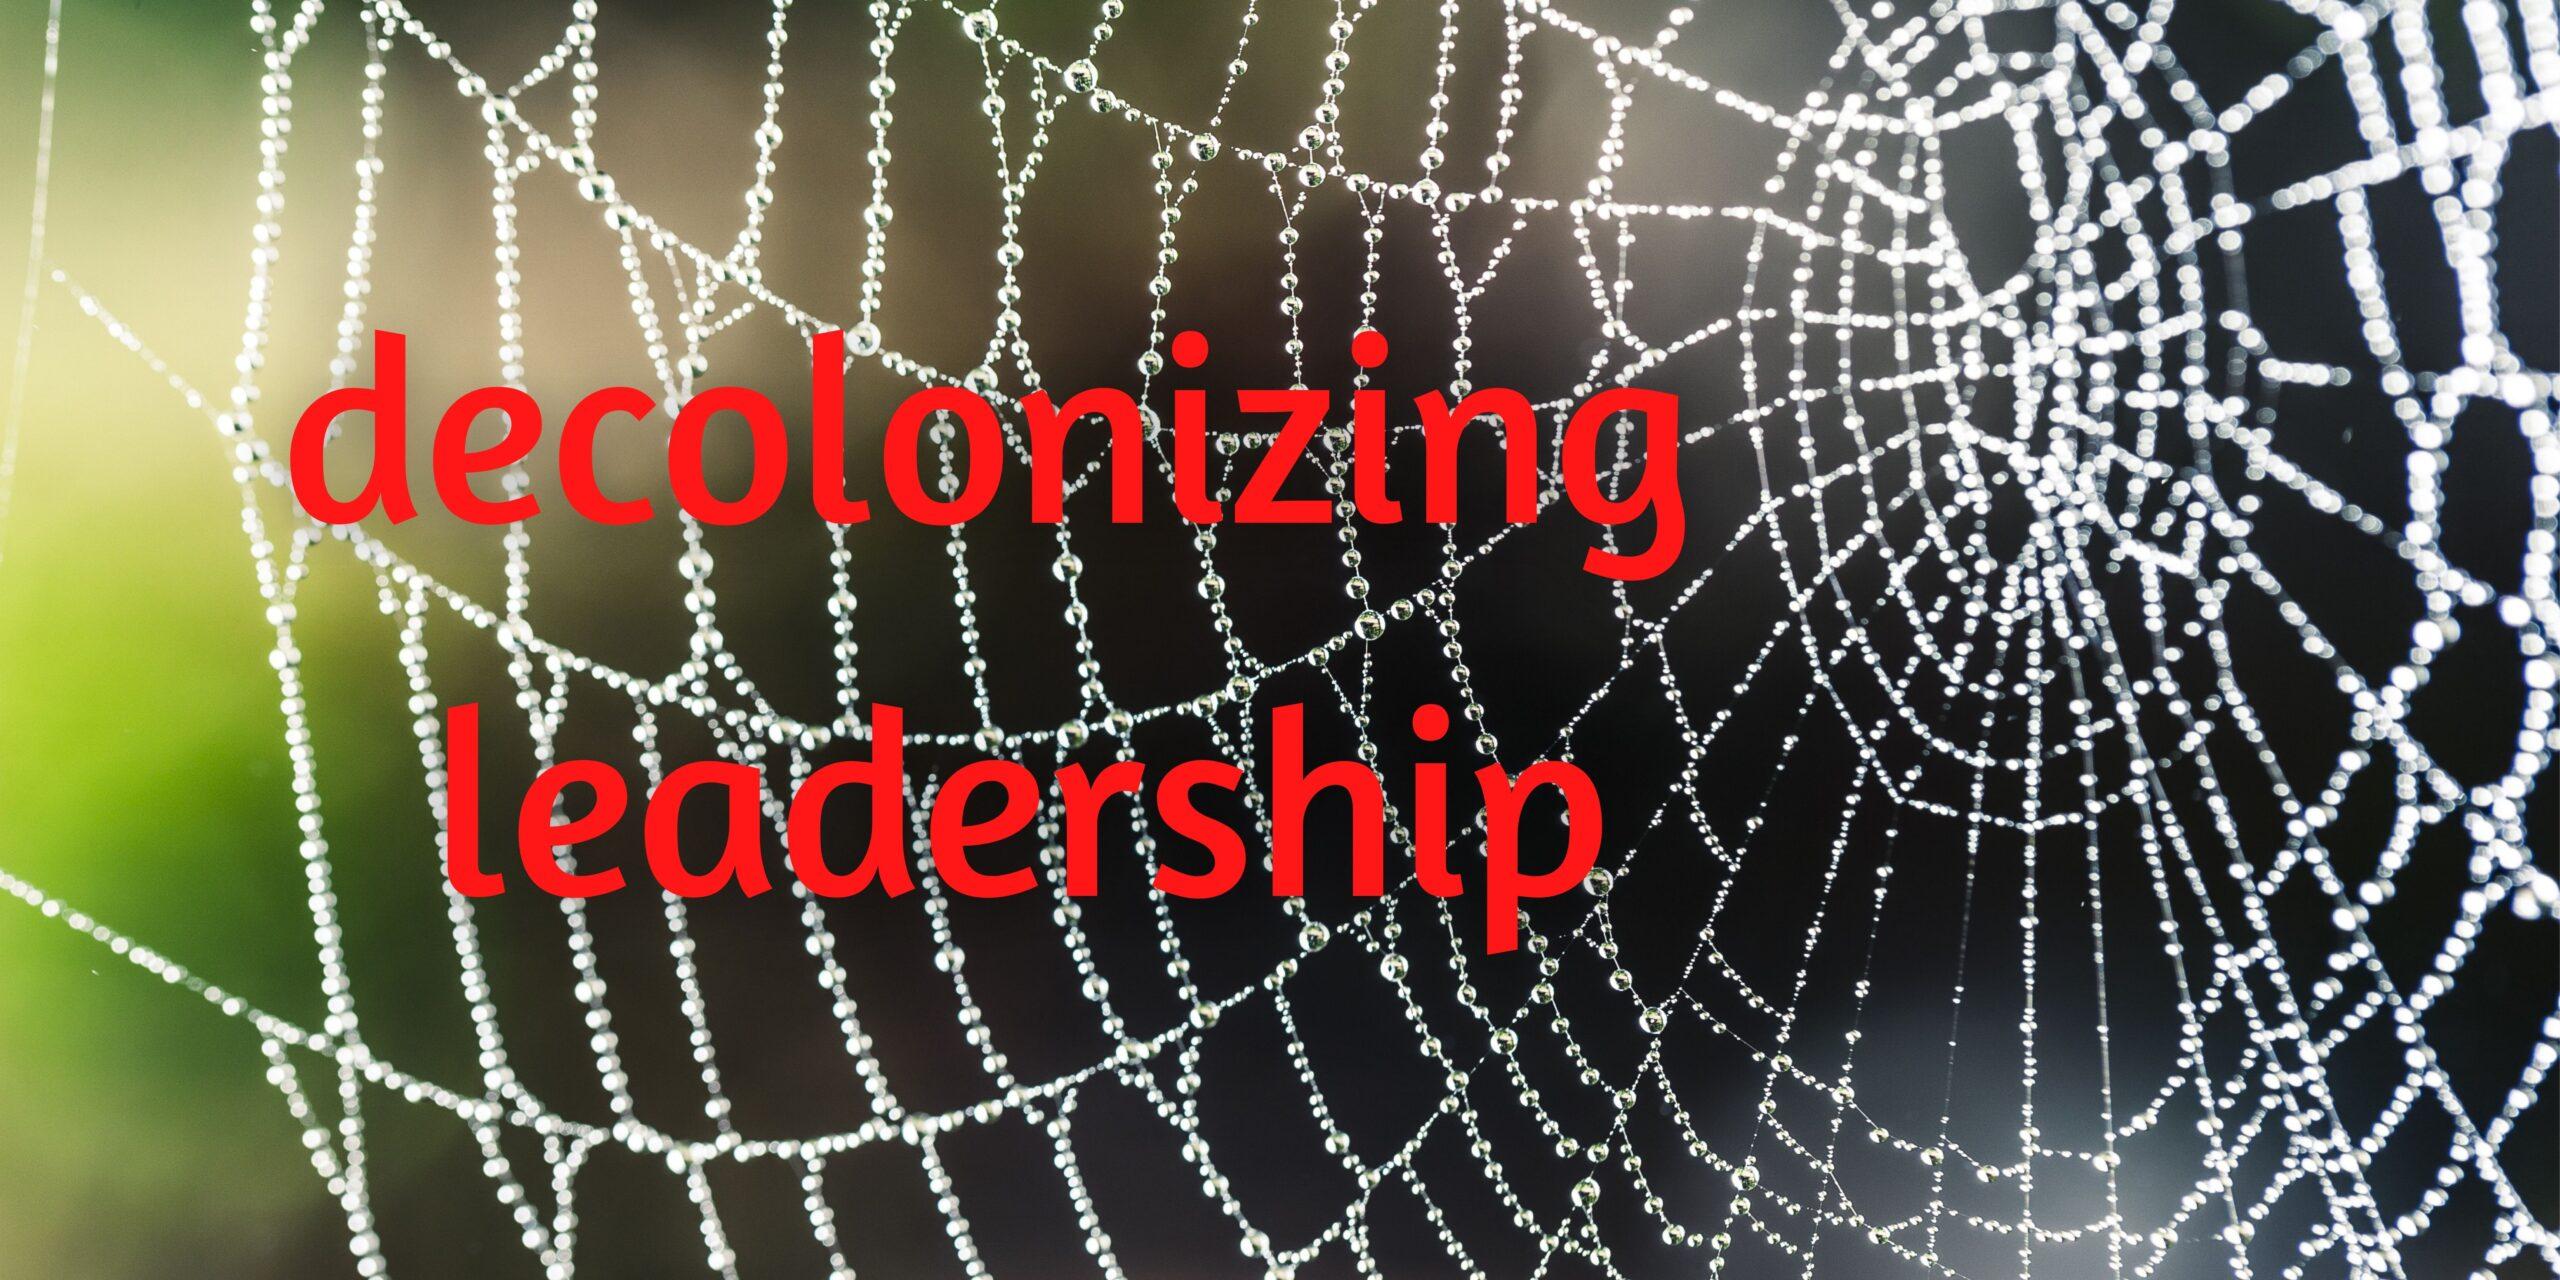 decolonizing leadership